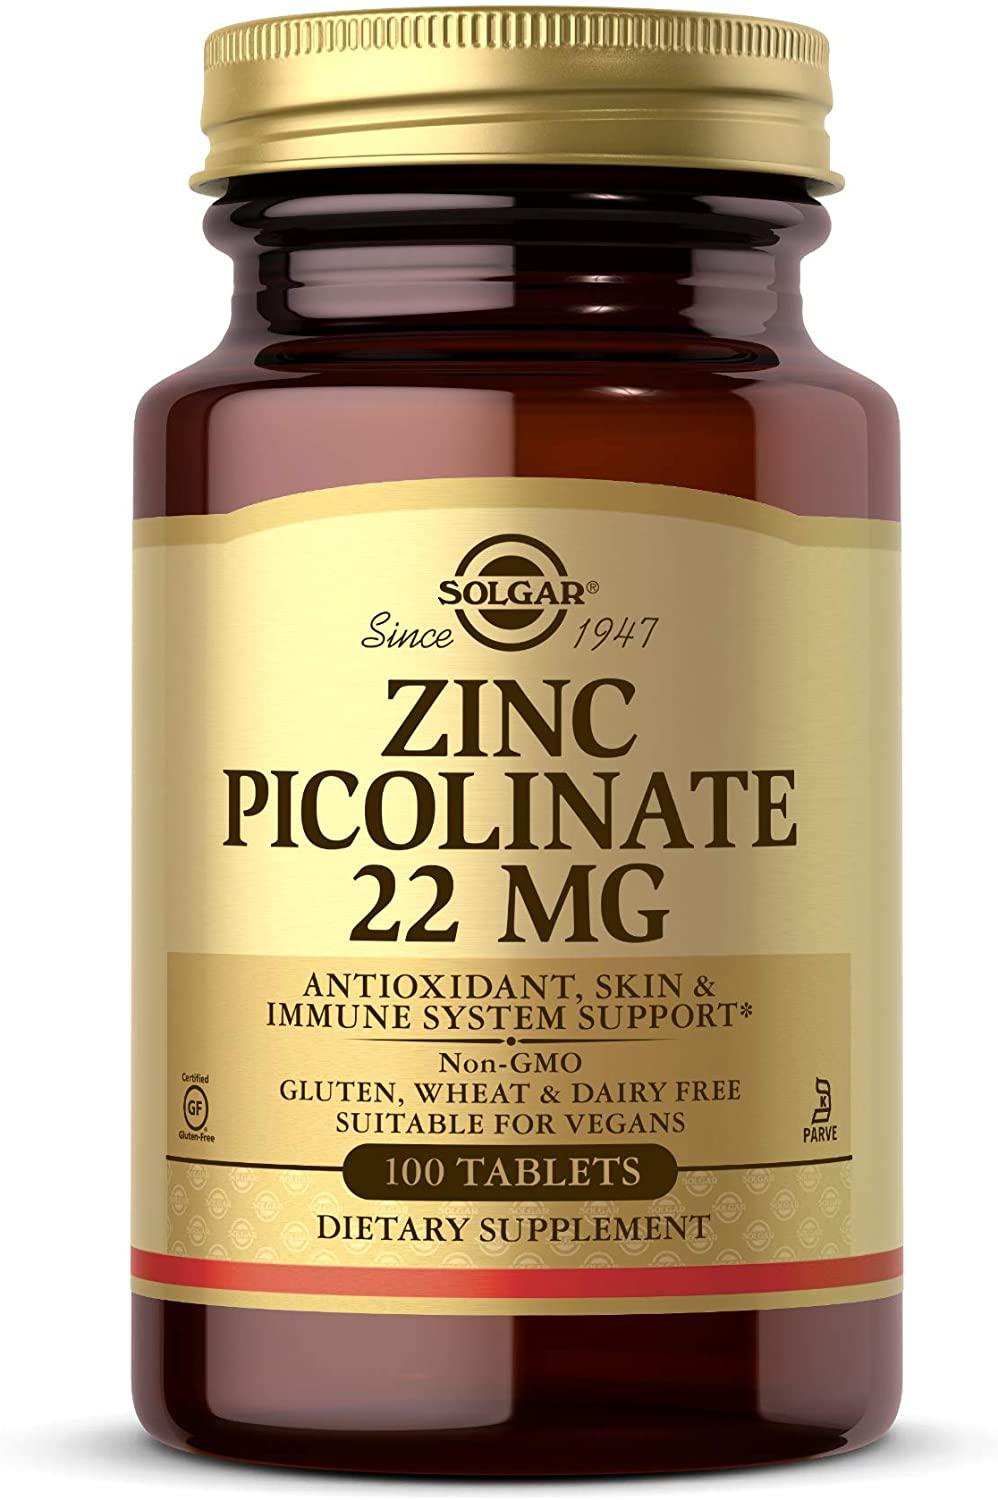 Solgar Zinc Picolinate 22 mg - mondialpharma.com